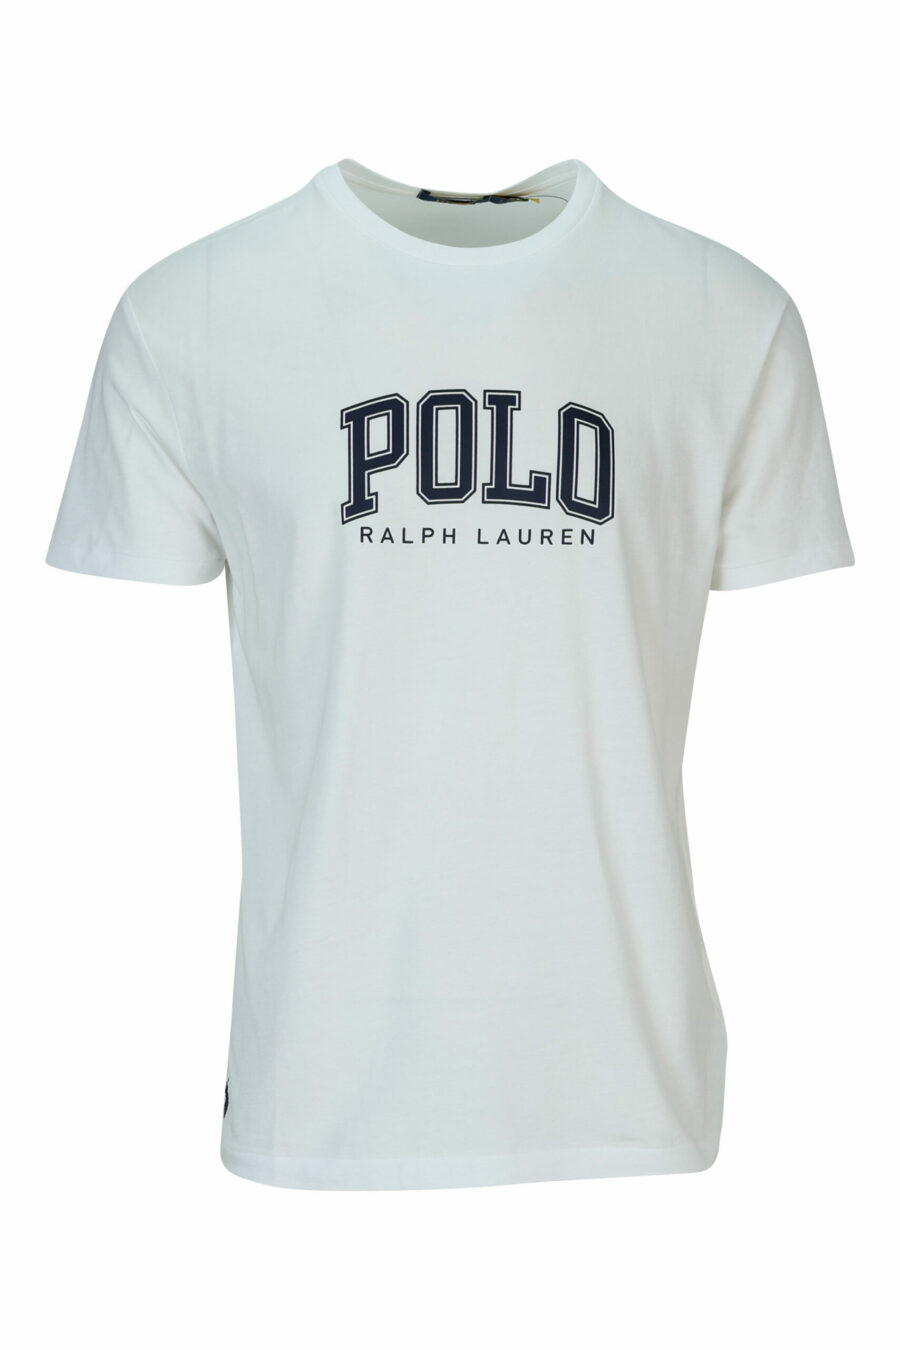 Weißes T-Shirt mit schwarzem "Polo"-Maxilogo - 3616536391115 skaliert